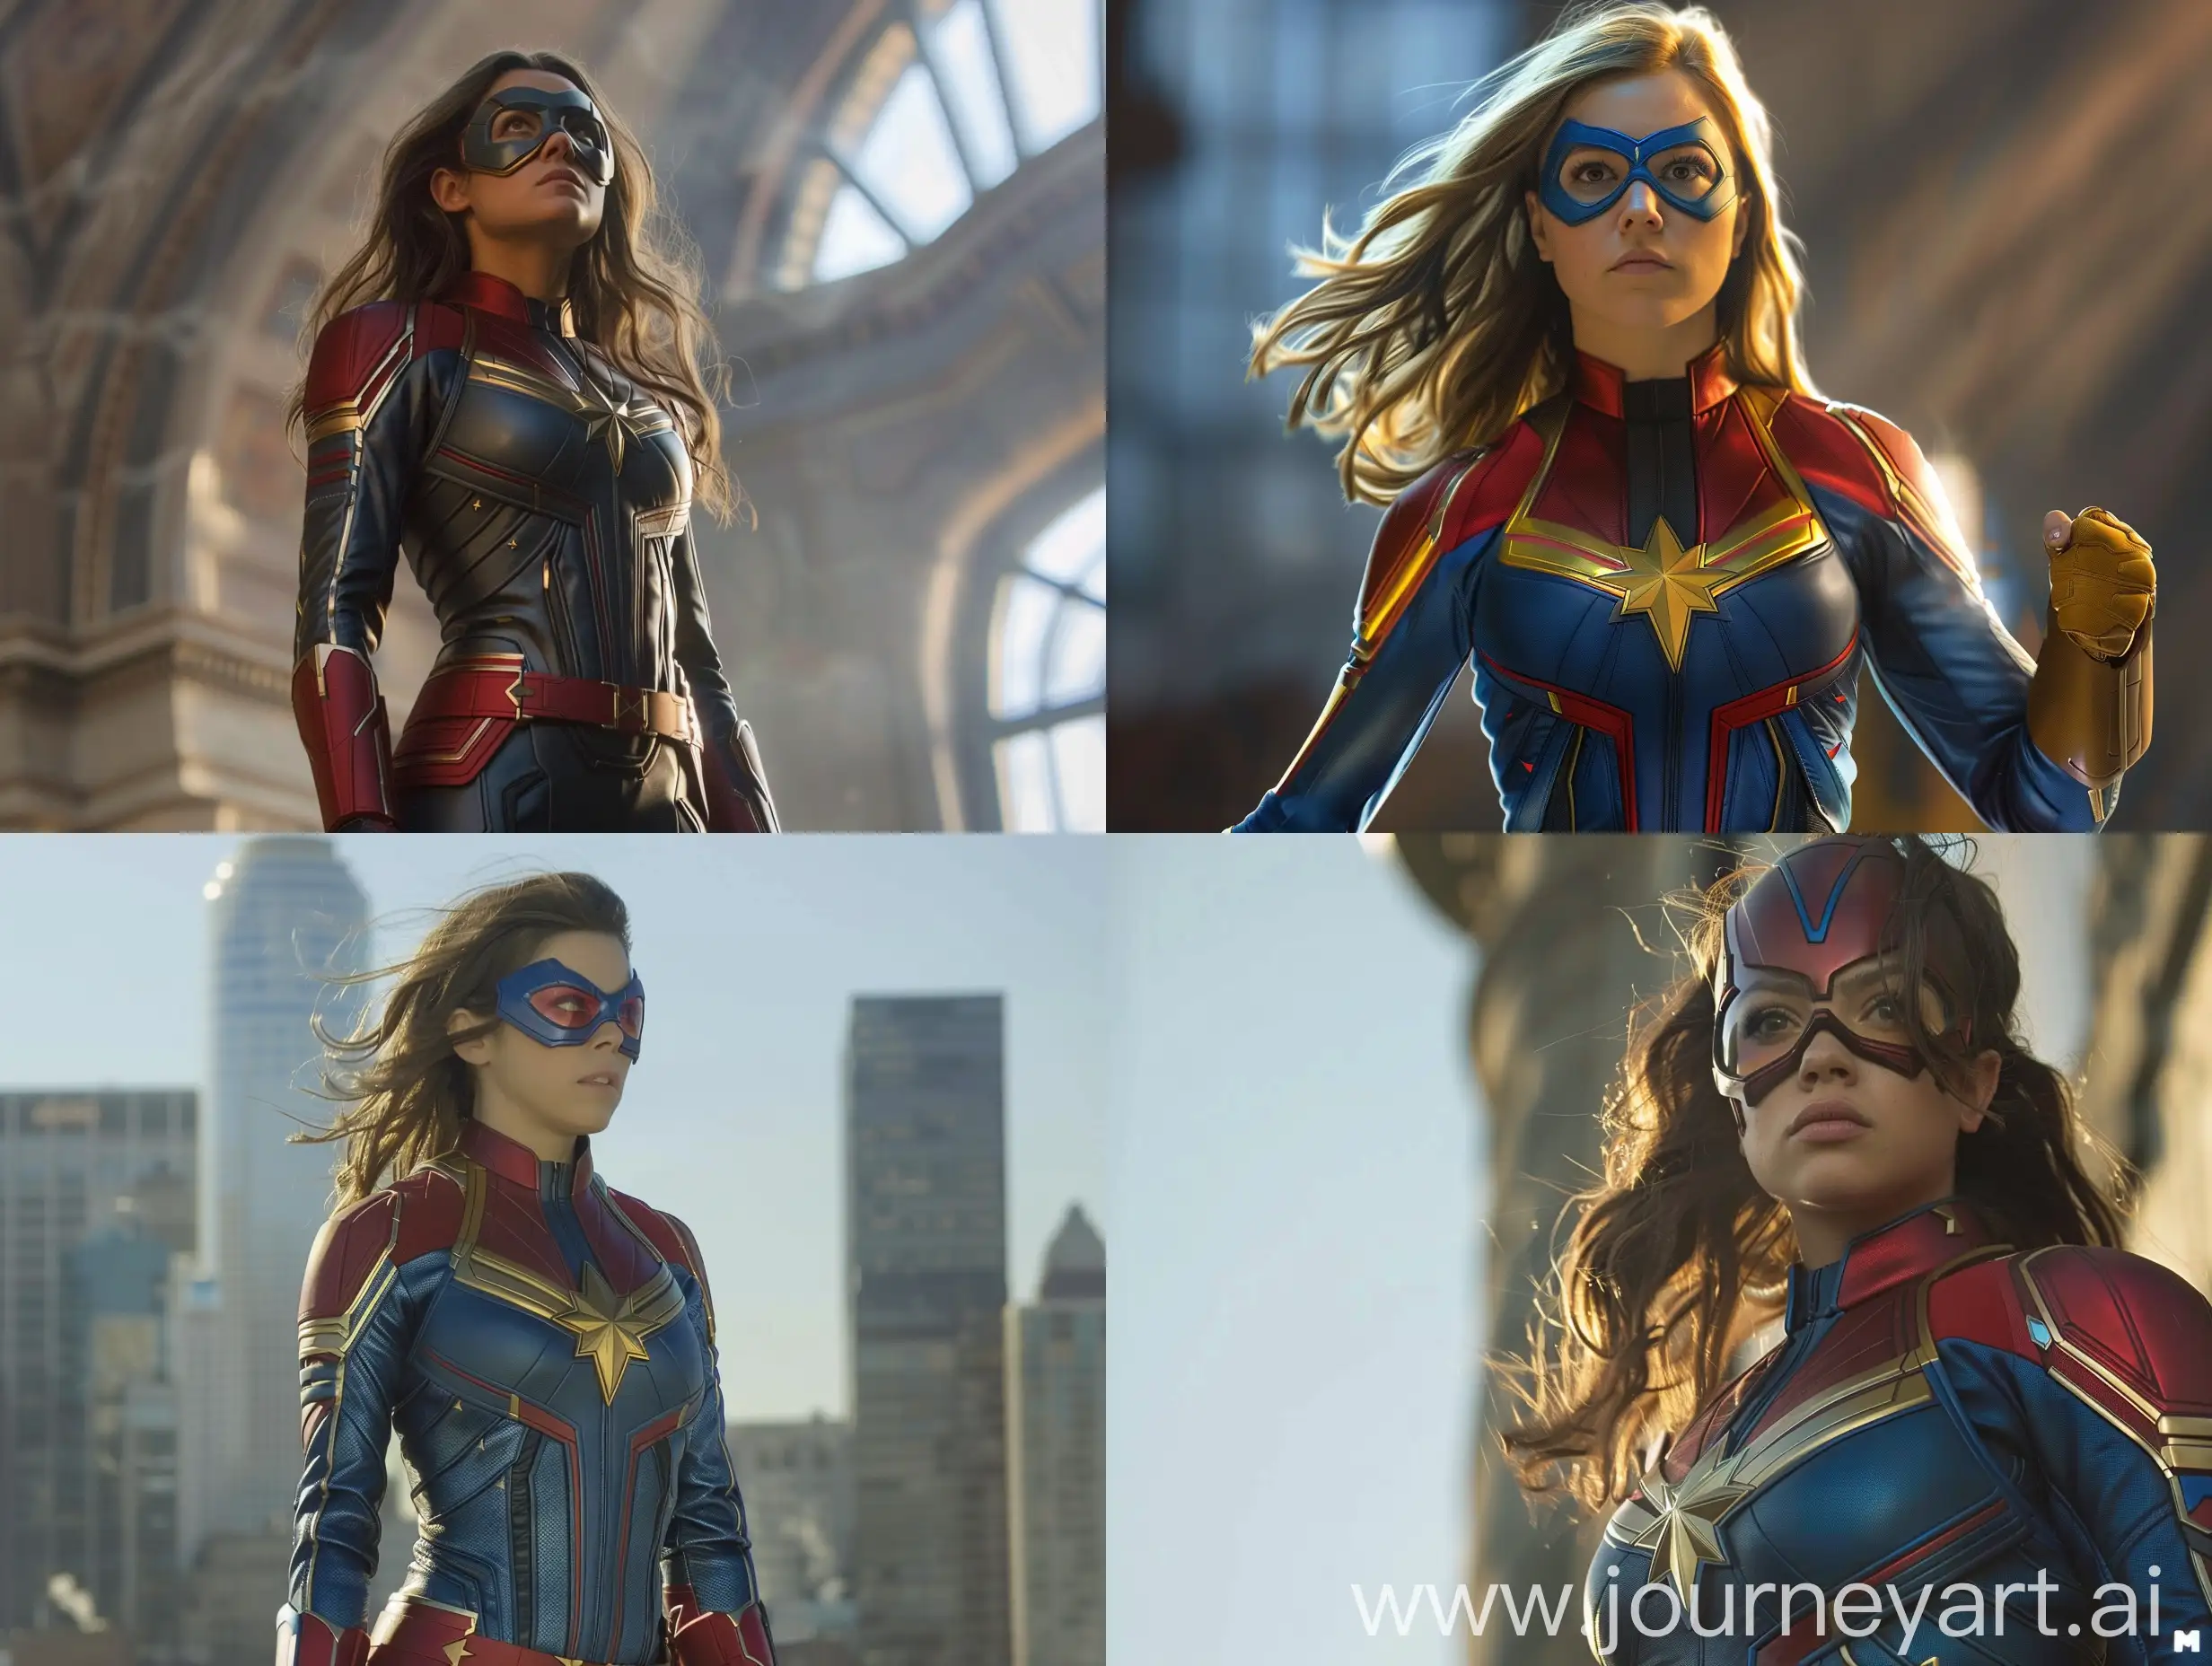 Sydney-Sweeney-Portrays-Ms-Marvel-in-Warbird-Costume